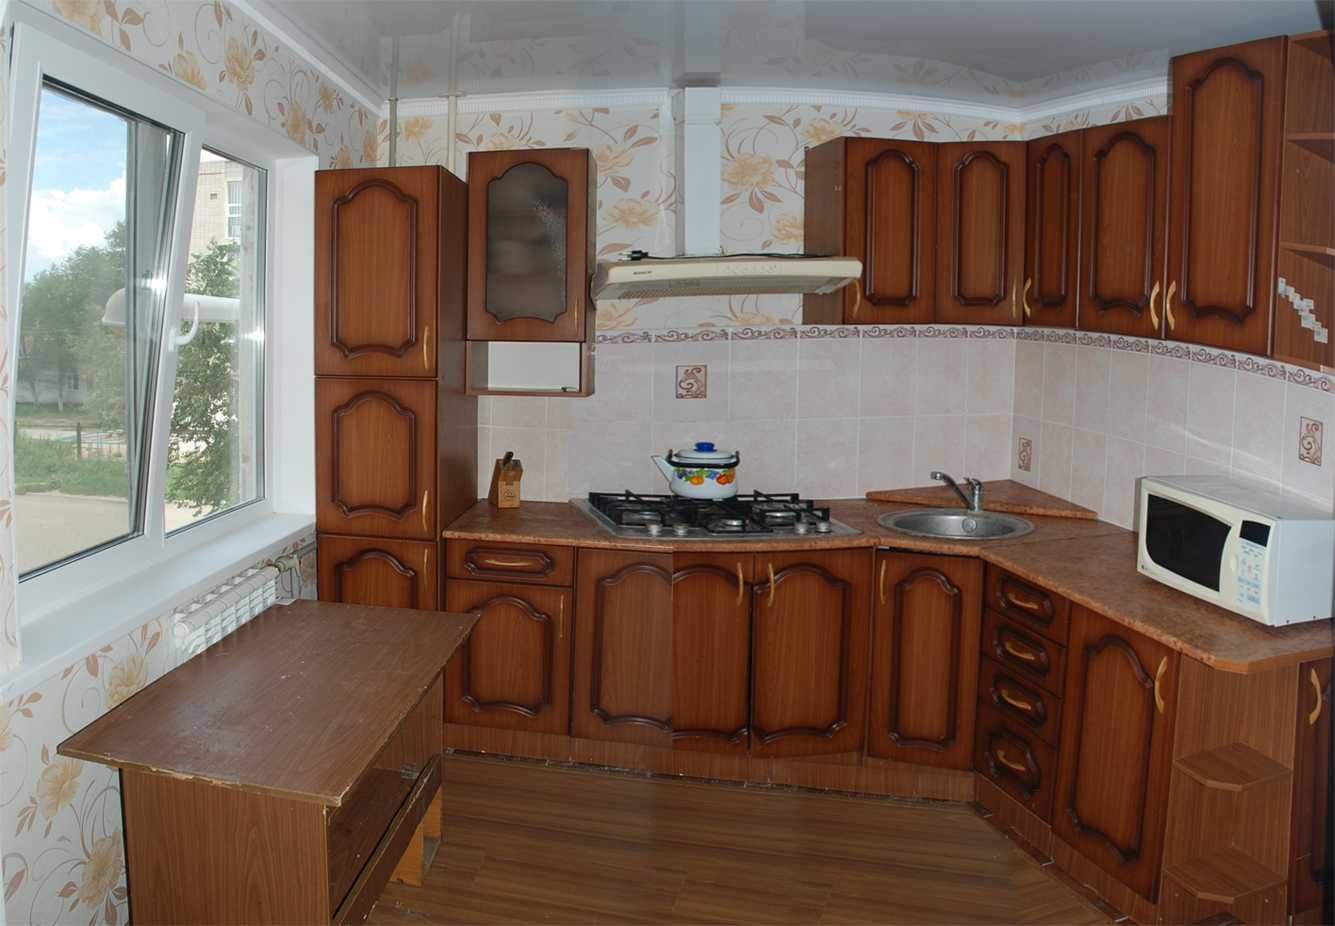 Продам 2-х комнатную квартиру в центре города Атырау